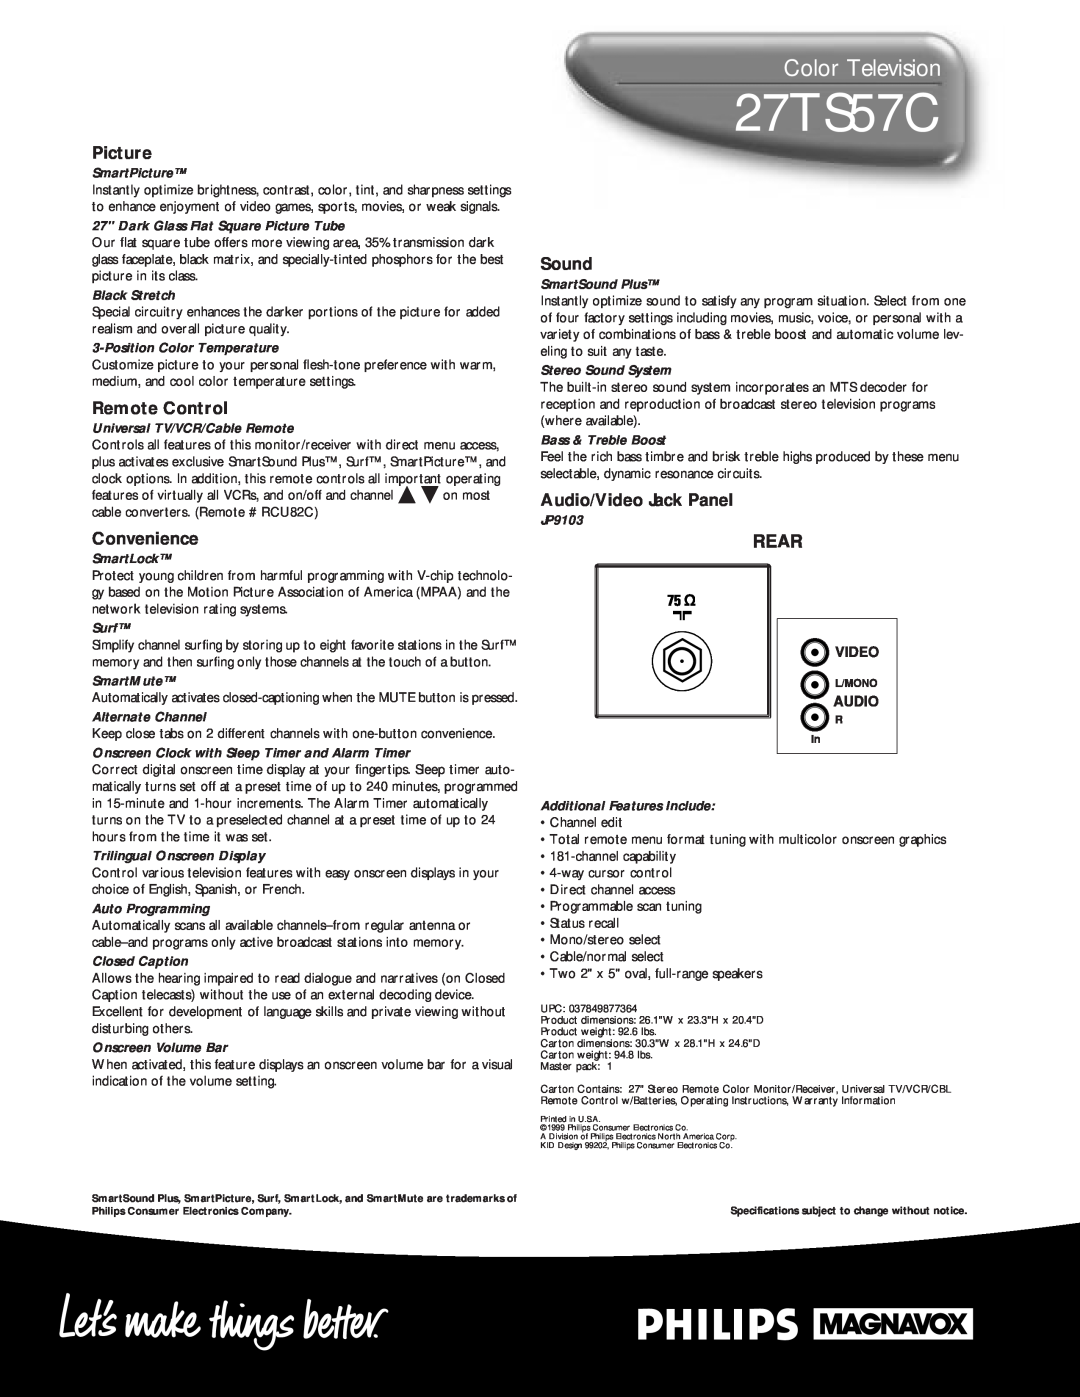 Philips 27TS57C manual Color Television, Picture, Remote Control, Convenience, Sound, Audio/Video Jack Panel 